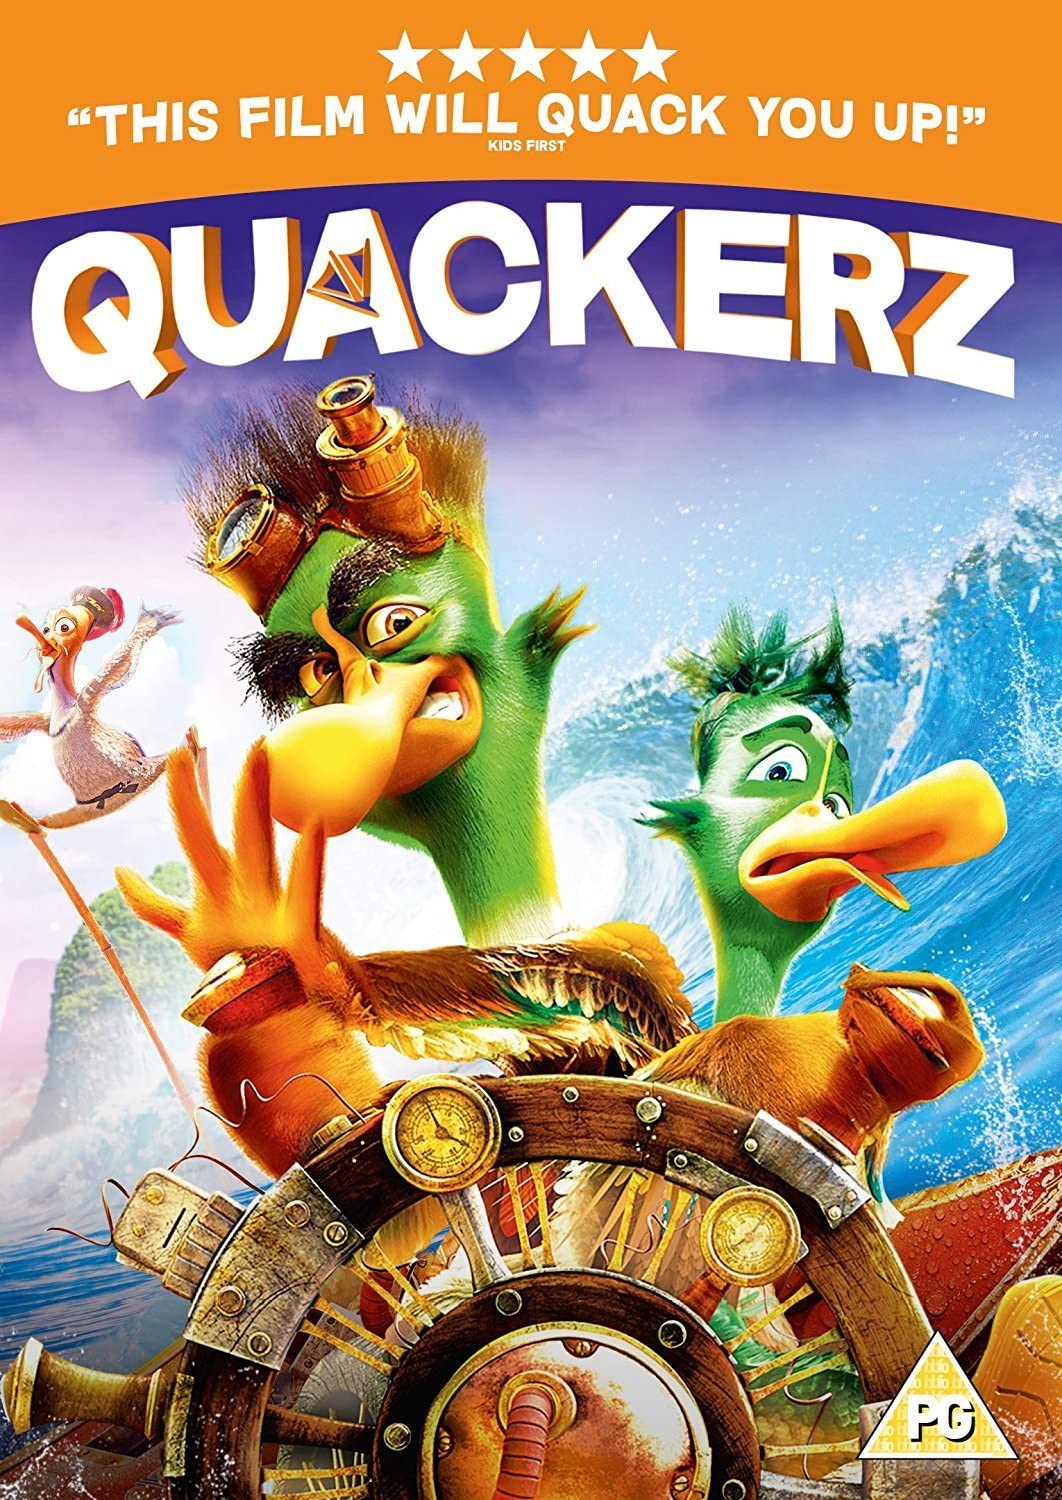 Quackerz - Comedy/Animation [DVD]